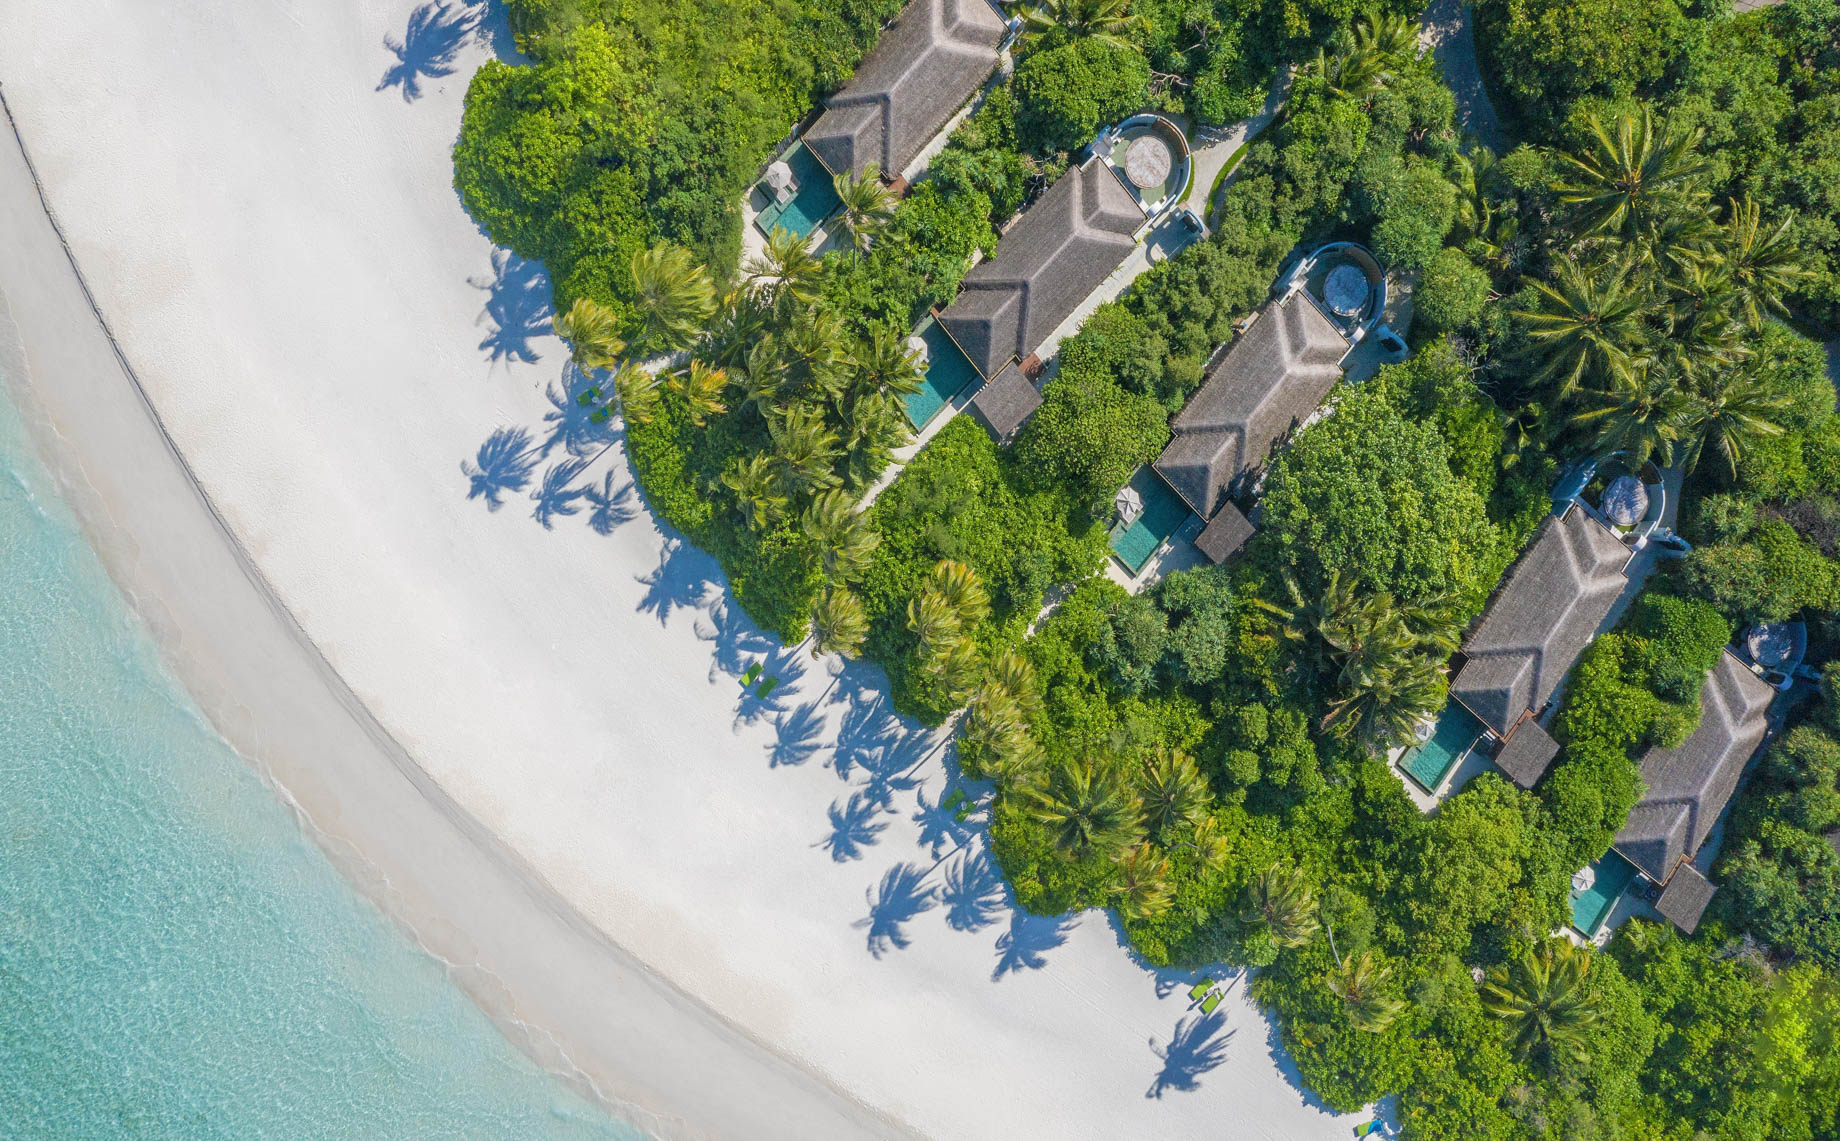 Anantara Kihavah Maldives Villas Resort – Baa Atoll, Maldives – Beach Pool Villas Overhead Aerial View